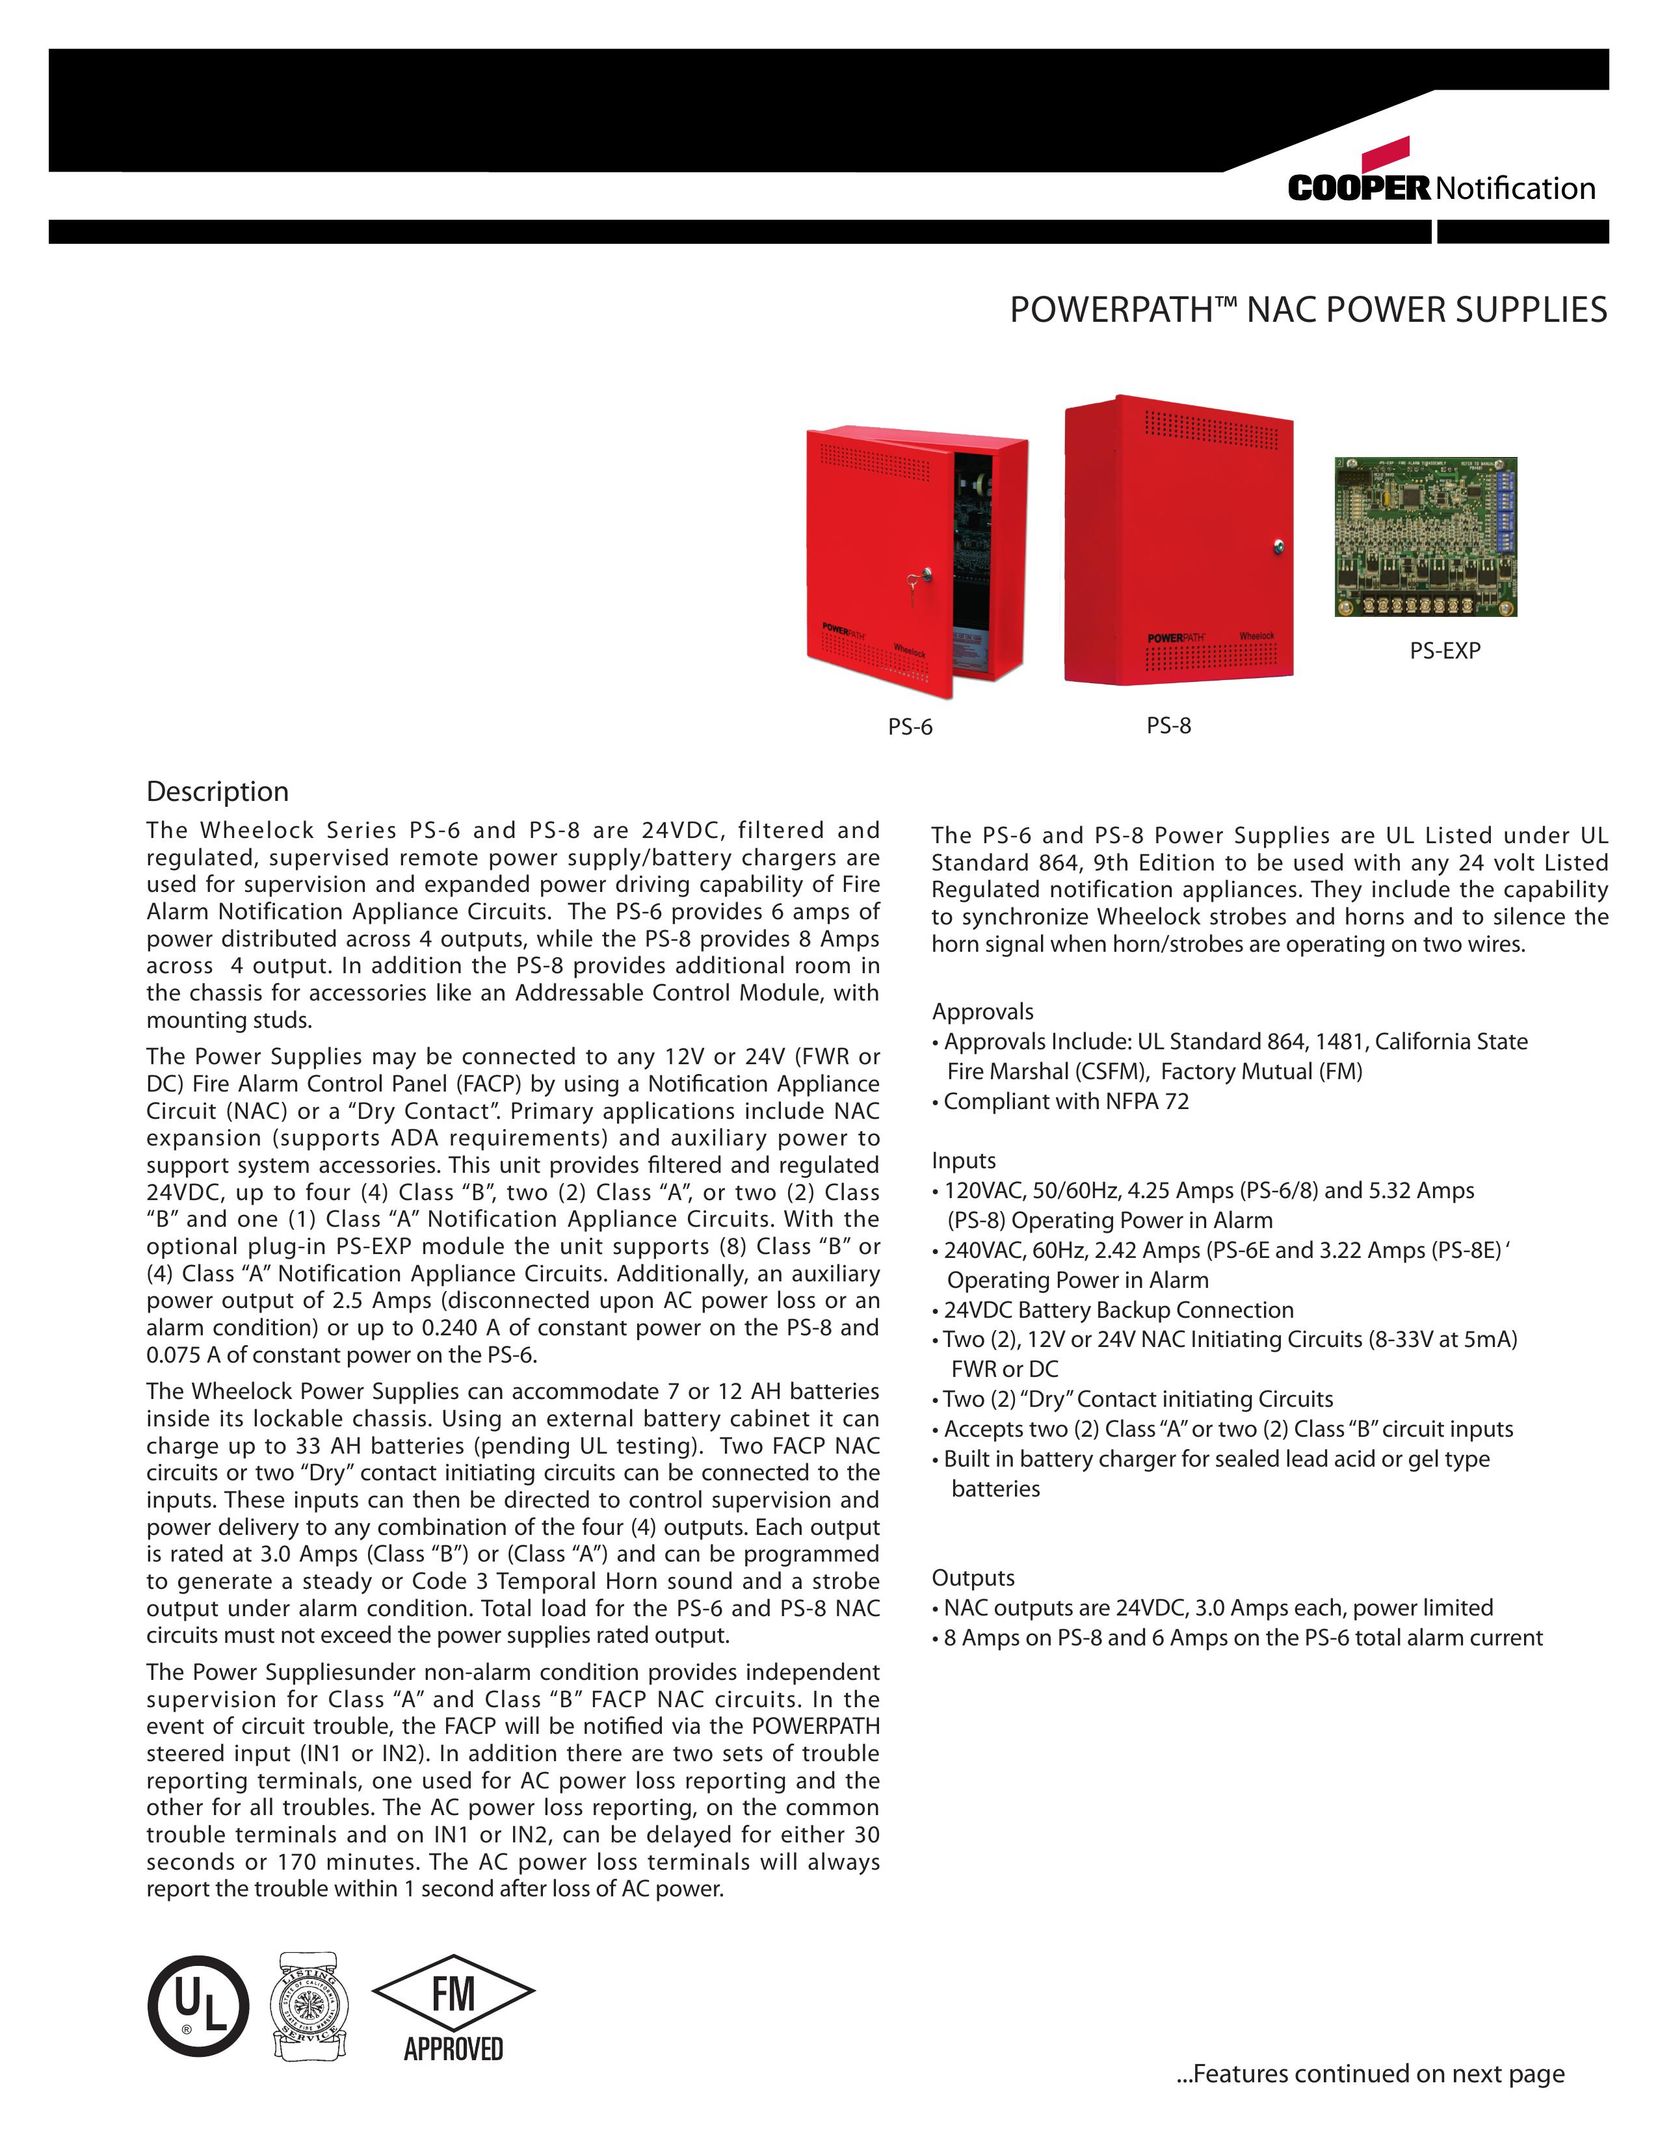 Cooper Bussmann PS-EXP Power Supply User Manual